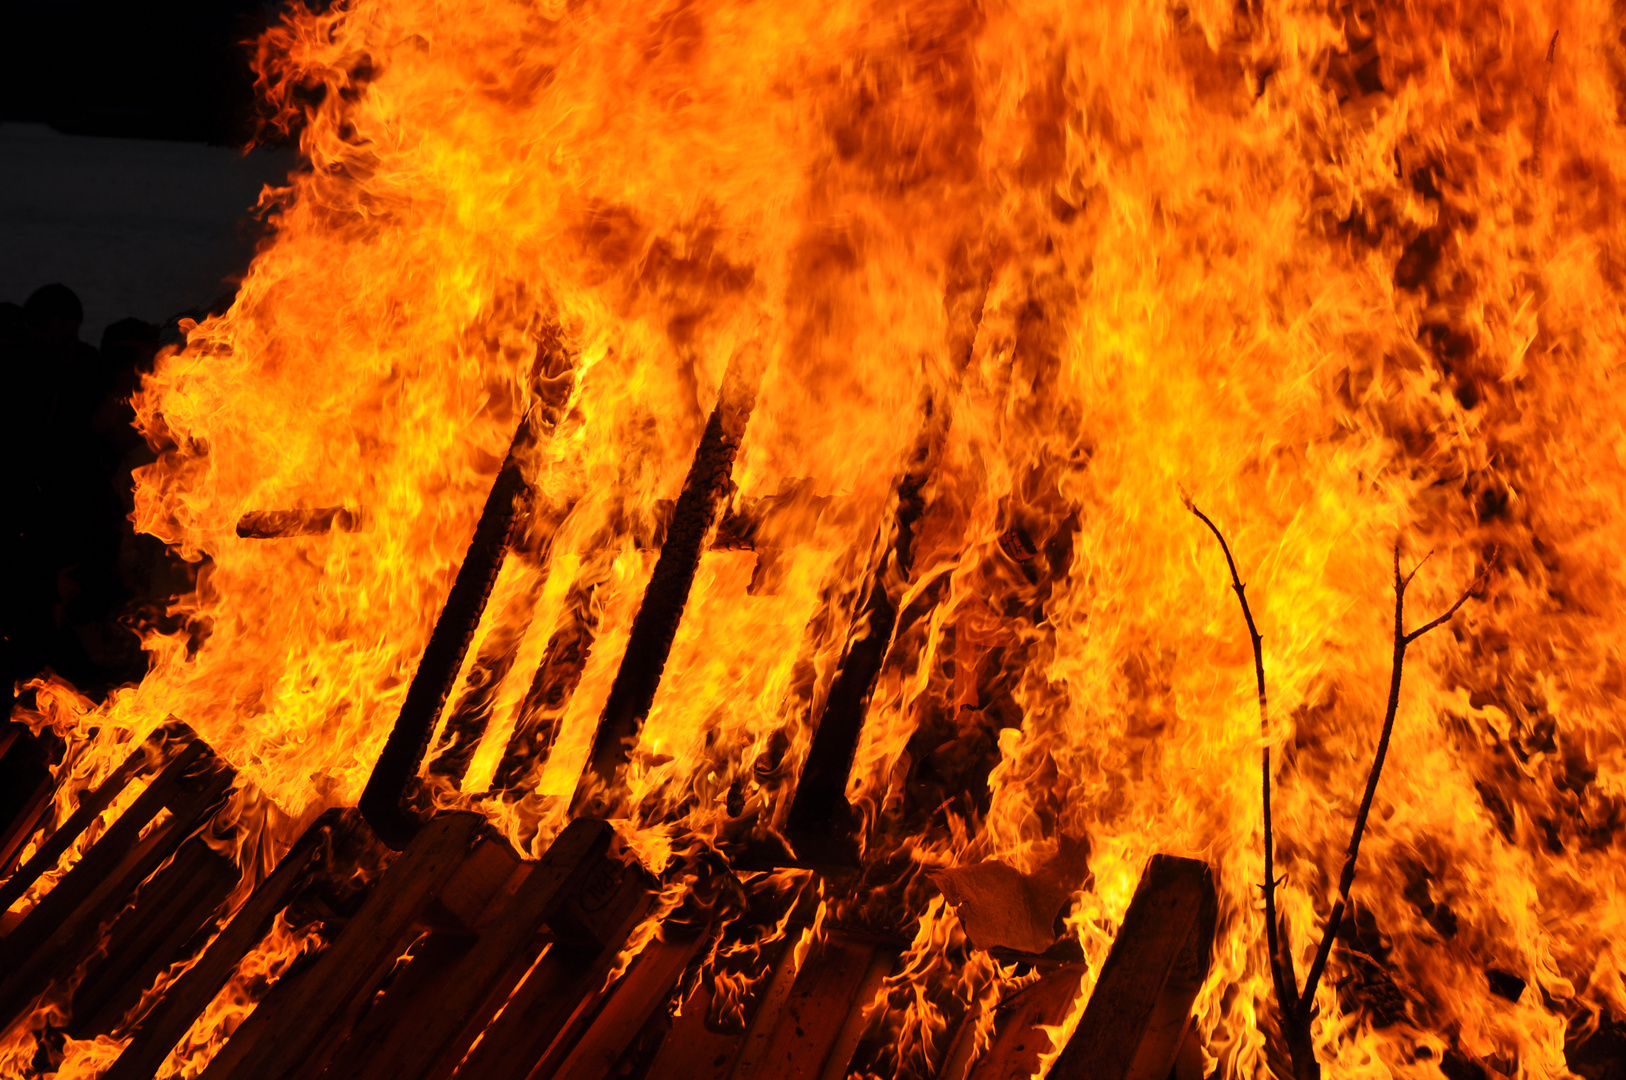  Feuer an Walburgesnacht/Valborg 30 April